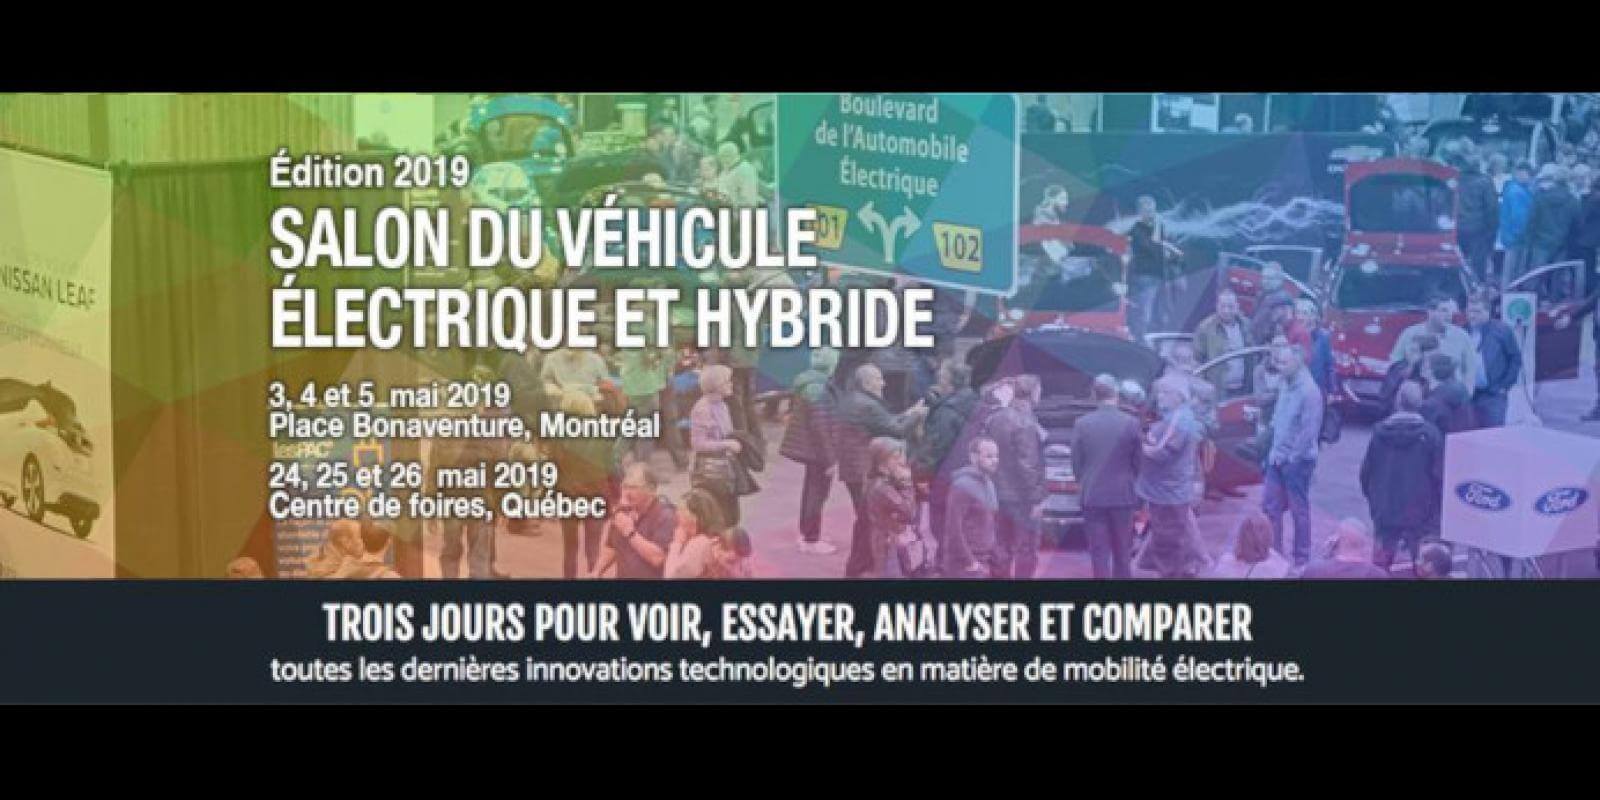 Quebec Electric Vehicle Show Events in Québec City